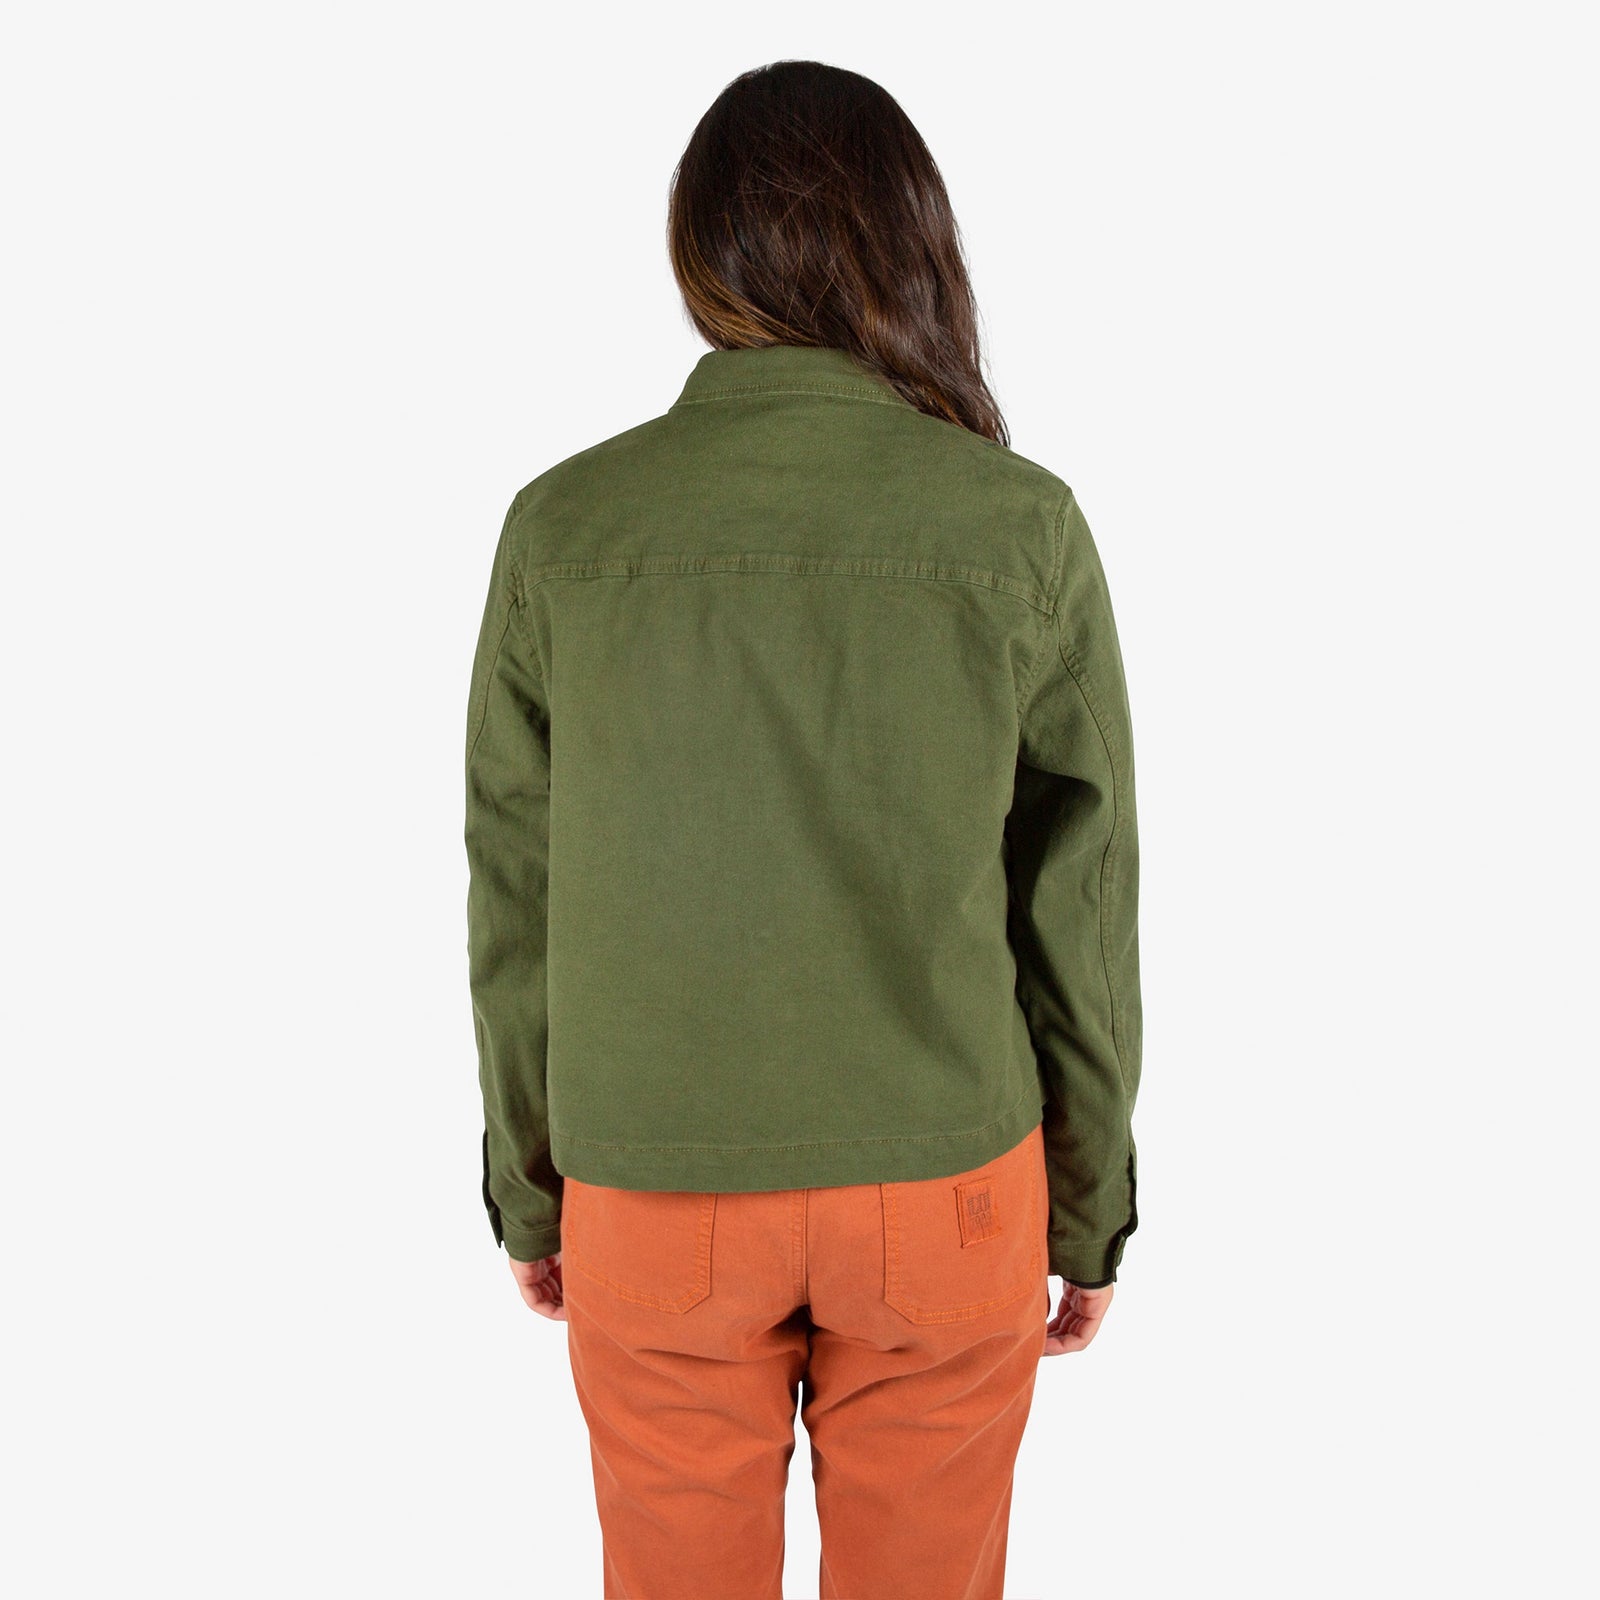 Back model shot of Topo Designs Women's Dirt Jacket in "Olive" green & Dirt Pants in Brick orange.